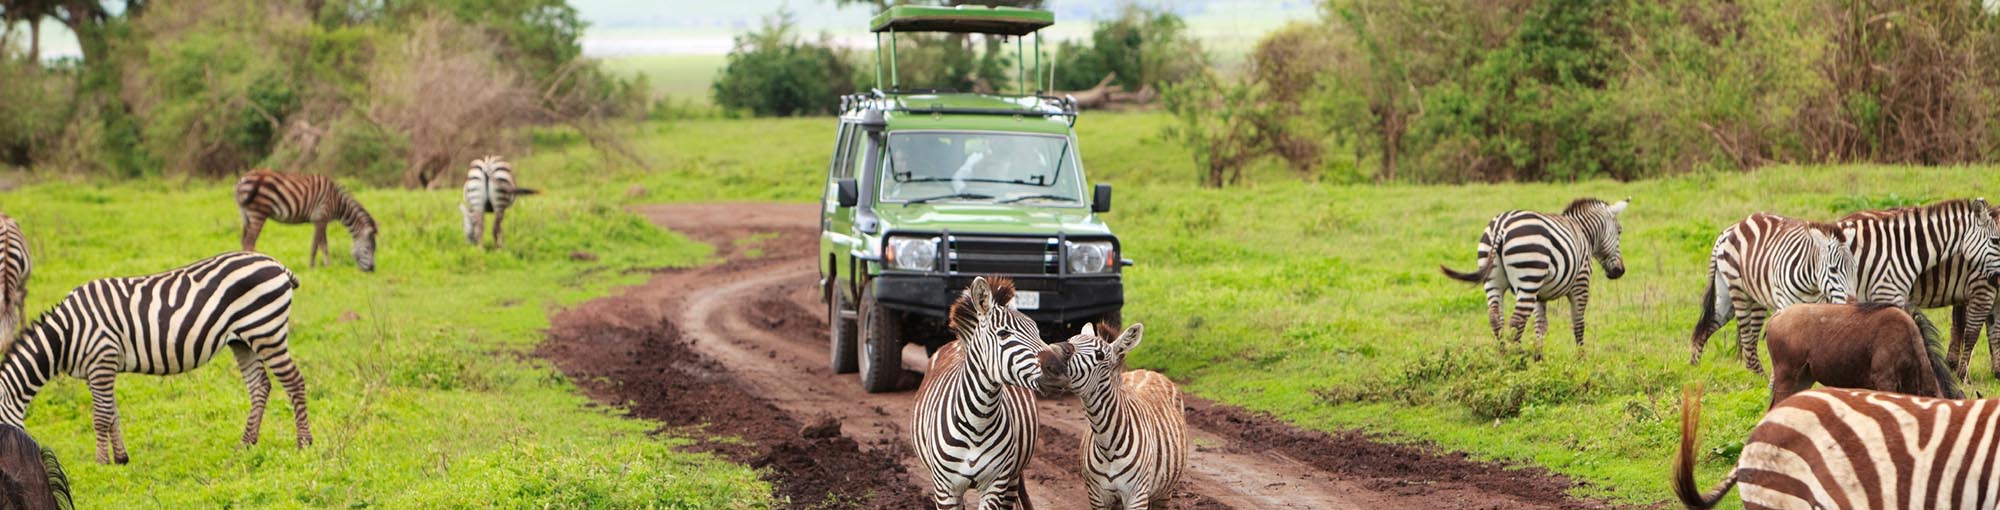 globus kenya and tanzania the safari experience